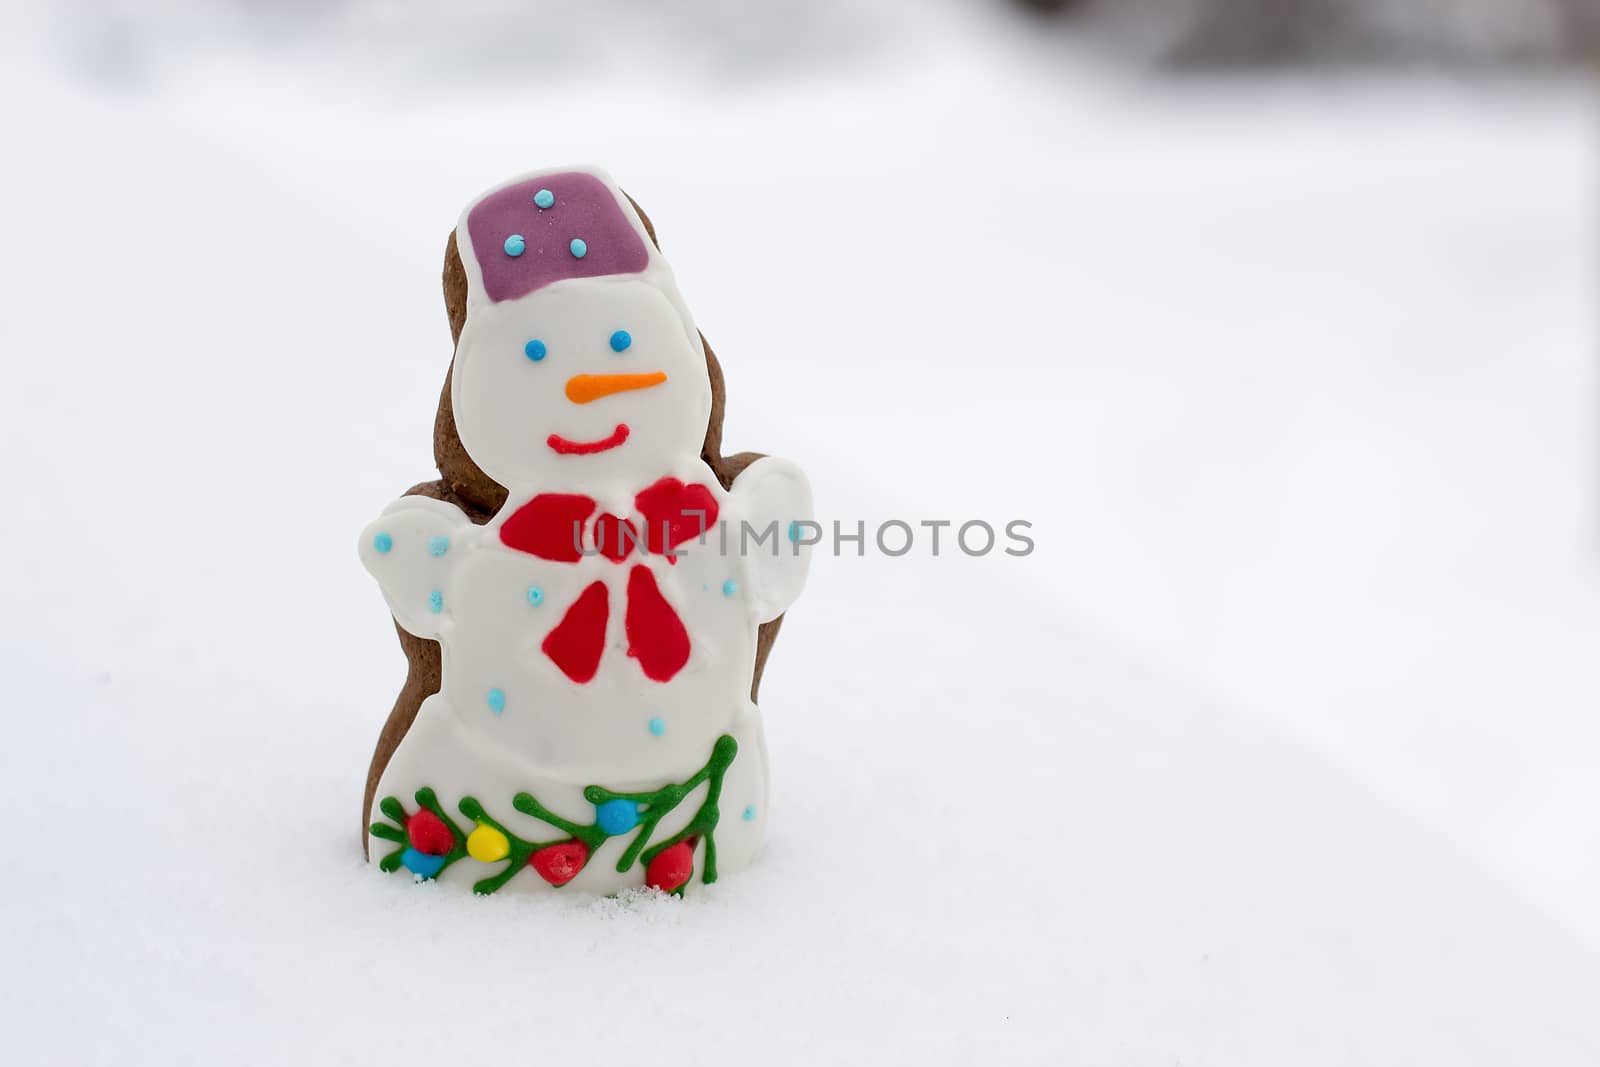 Snowman cookies by JessAerons